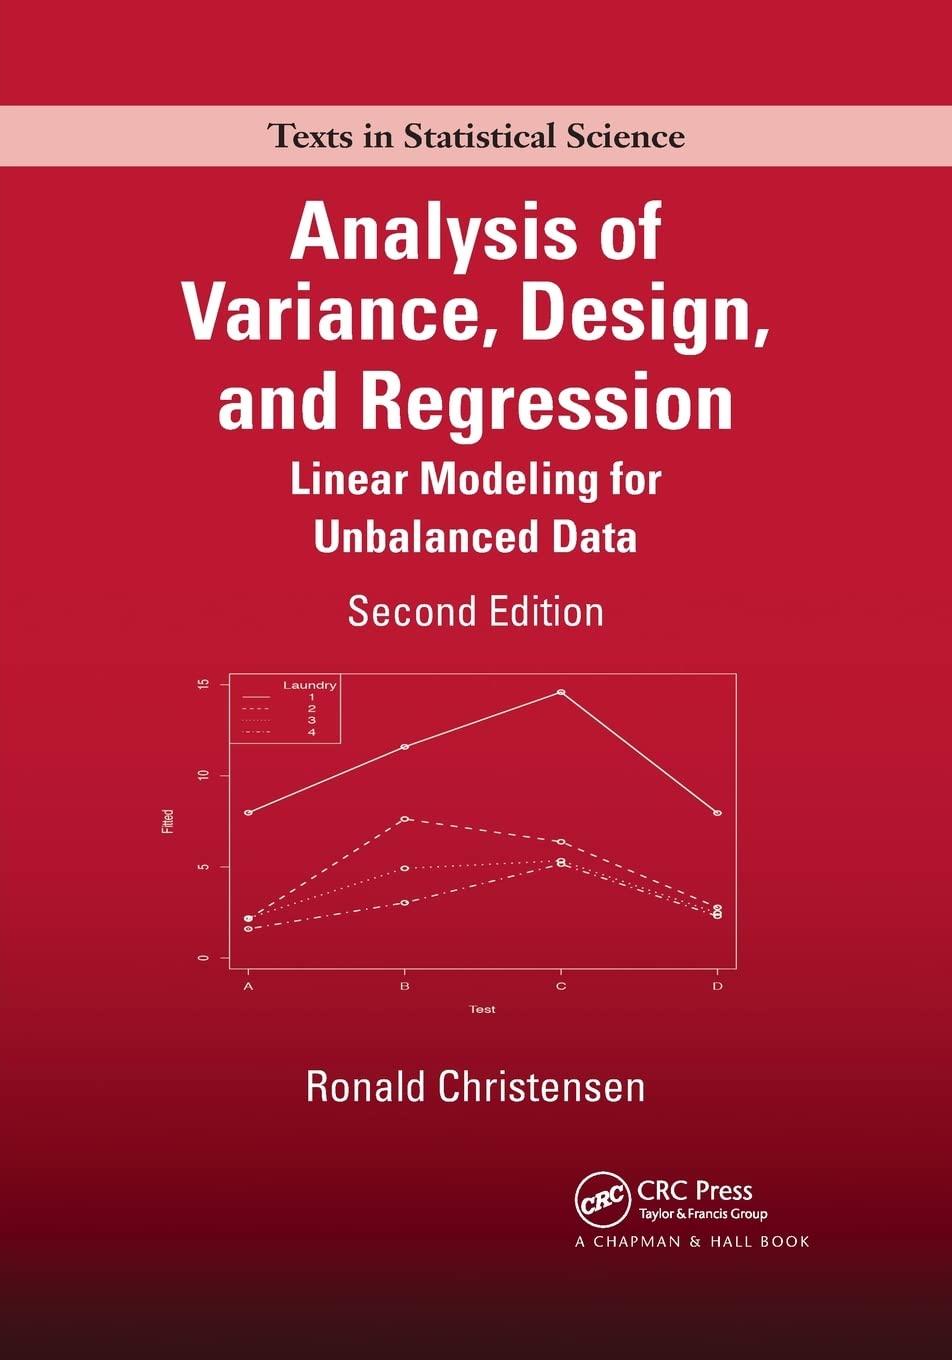 analysis of variance design and regression 2nd edition ronald christensen 036773740x, 978-0367737405